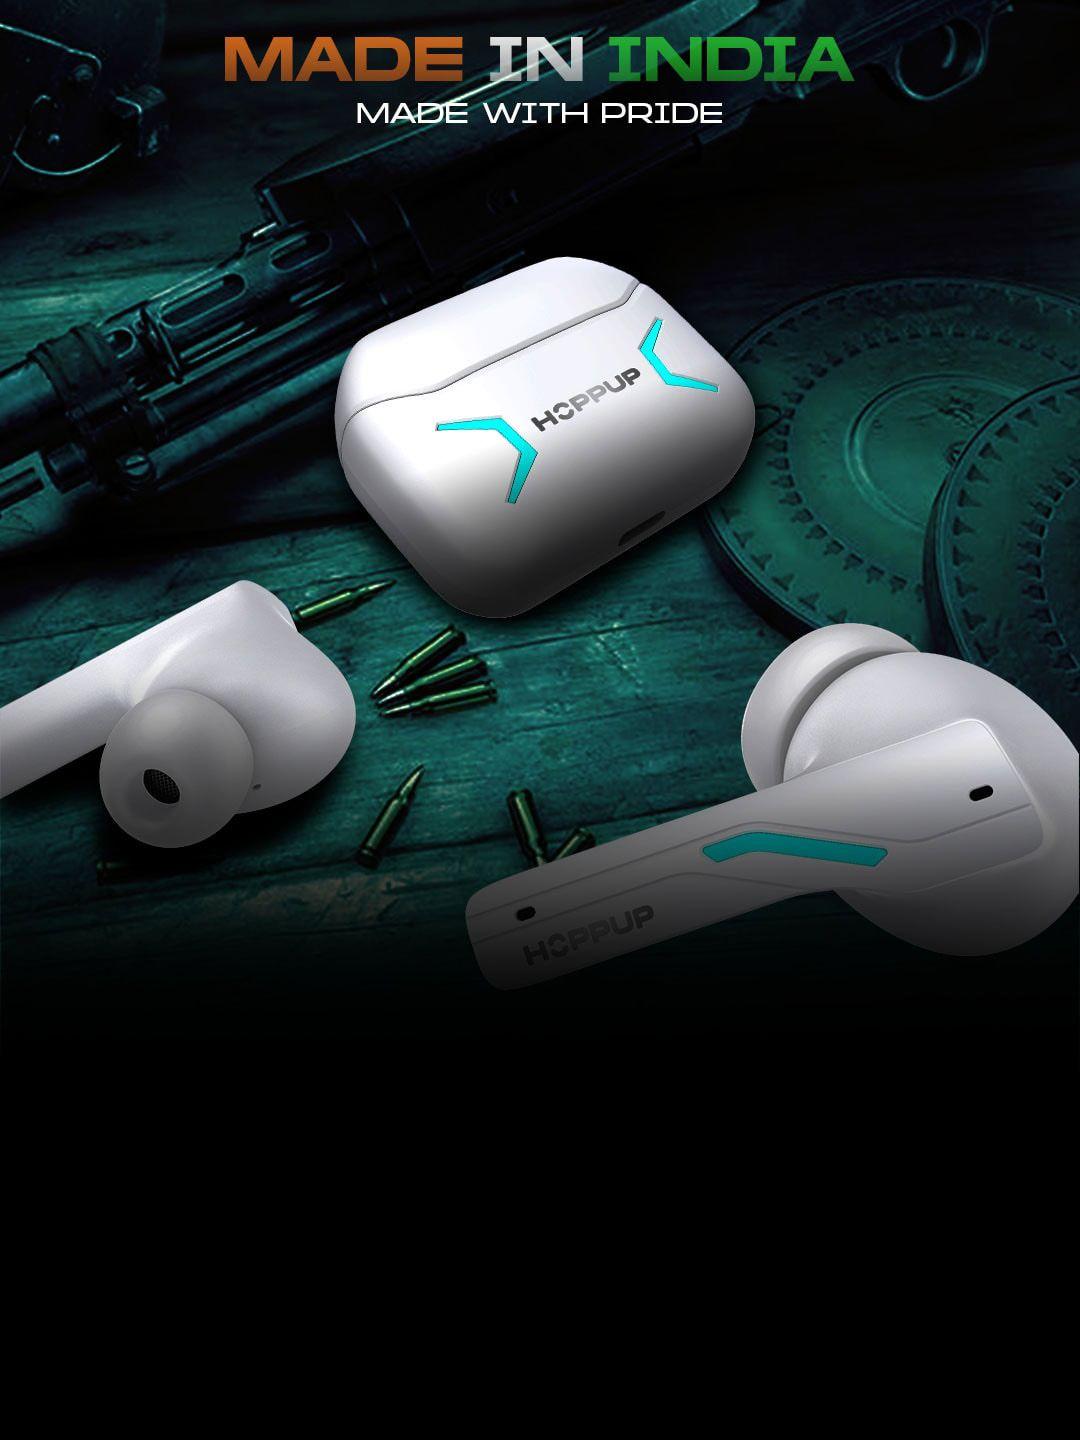 hoppup predator xo1 gaming earbuds with 13mm drivers headphones